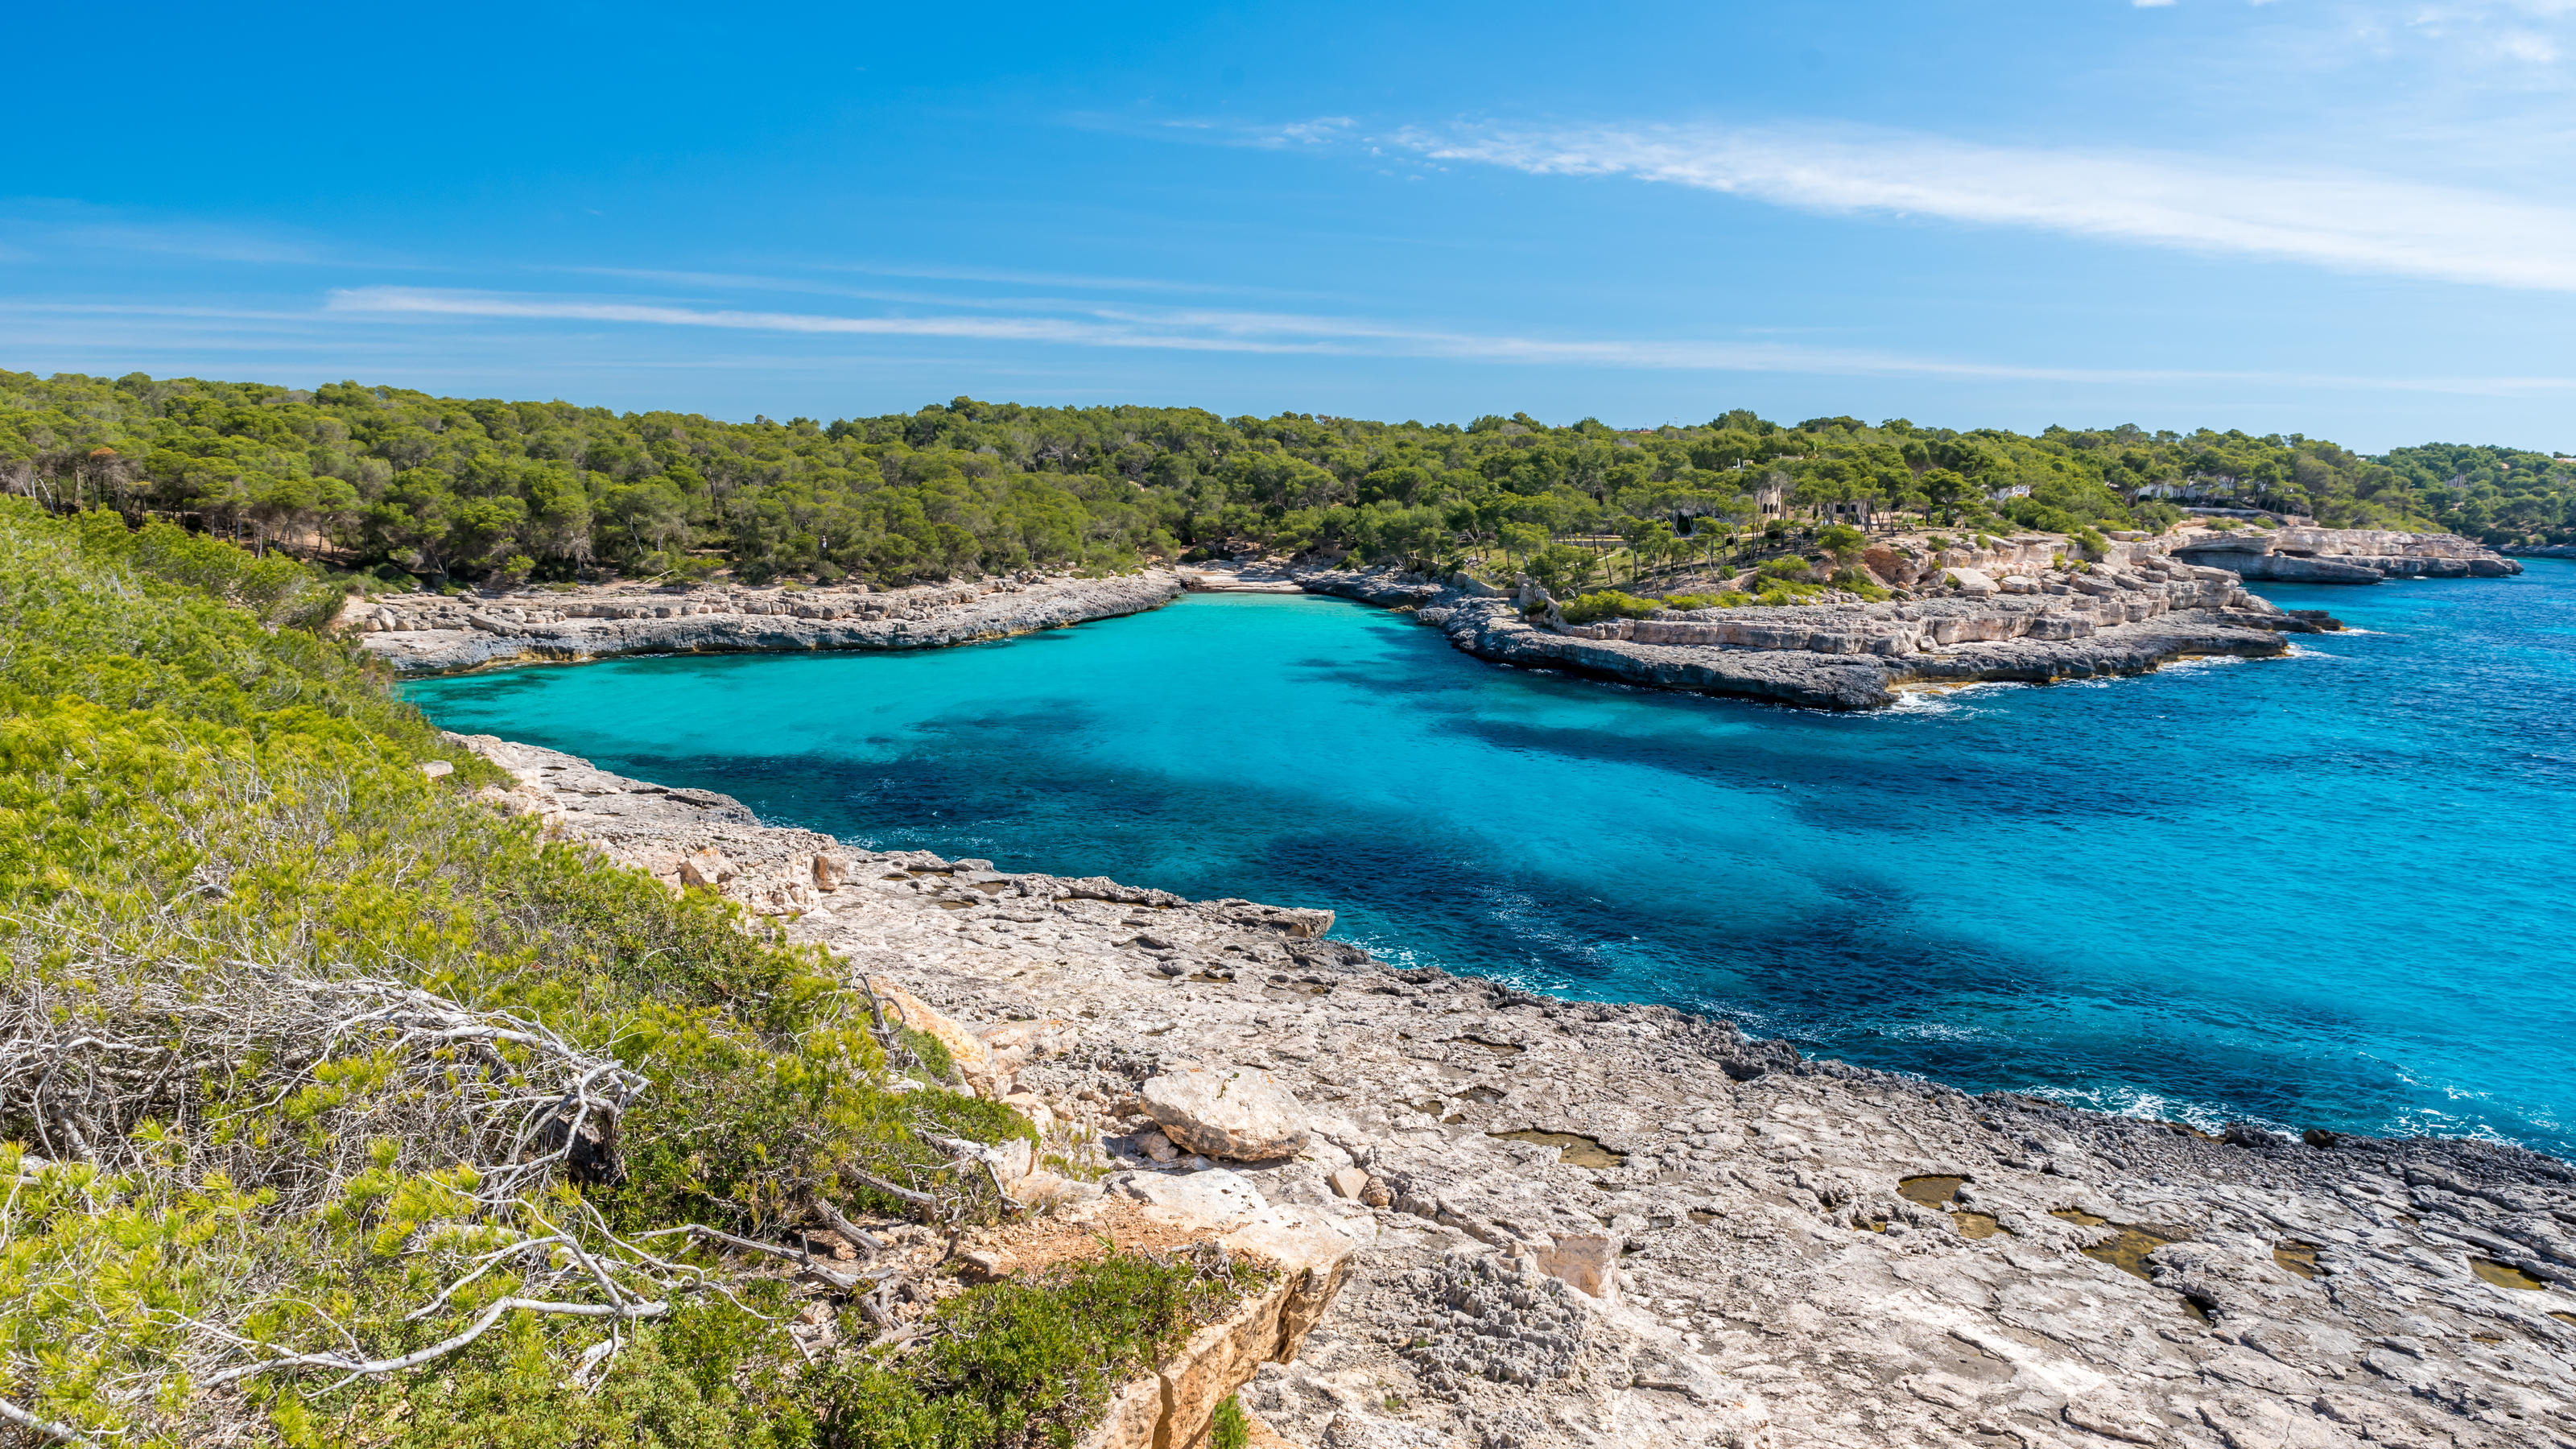 Bay of Cala Mondrago - beautiful beach and coast of Mallorca, Spain